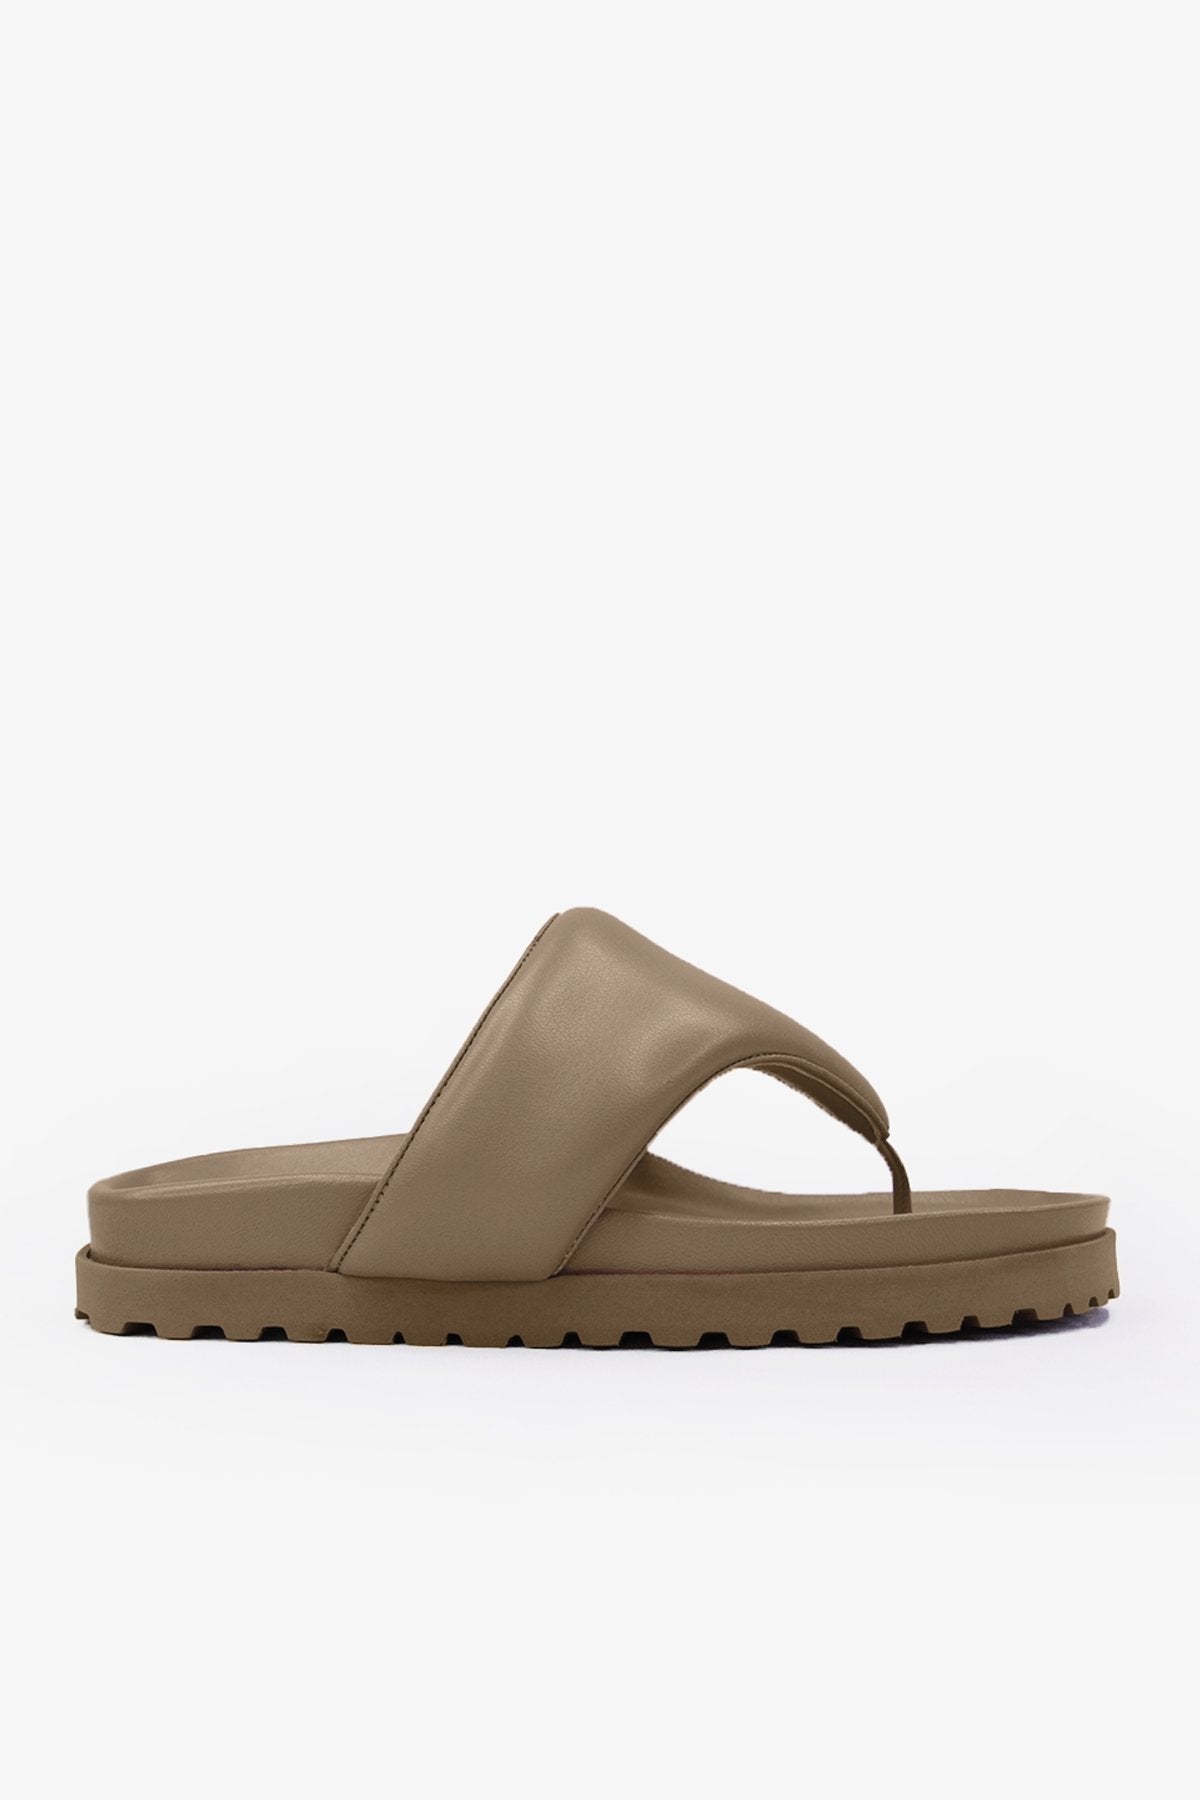 Perni Padded Flip Flop Flat Sandal in Taupe - shop-olivia.com